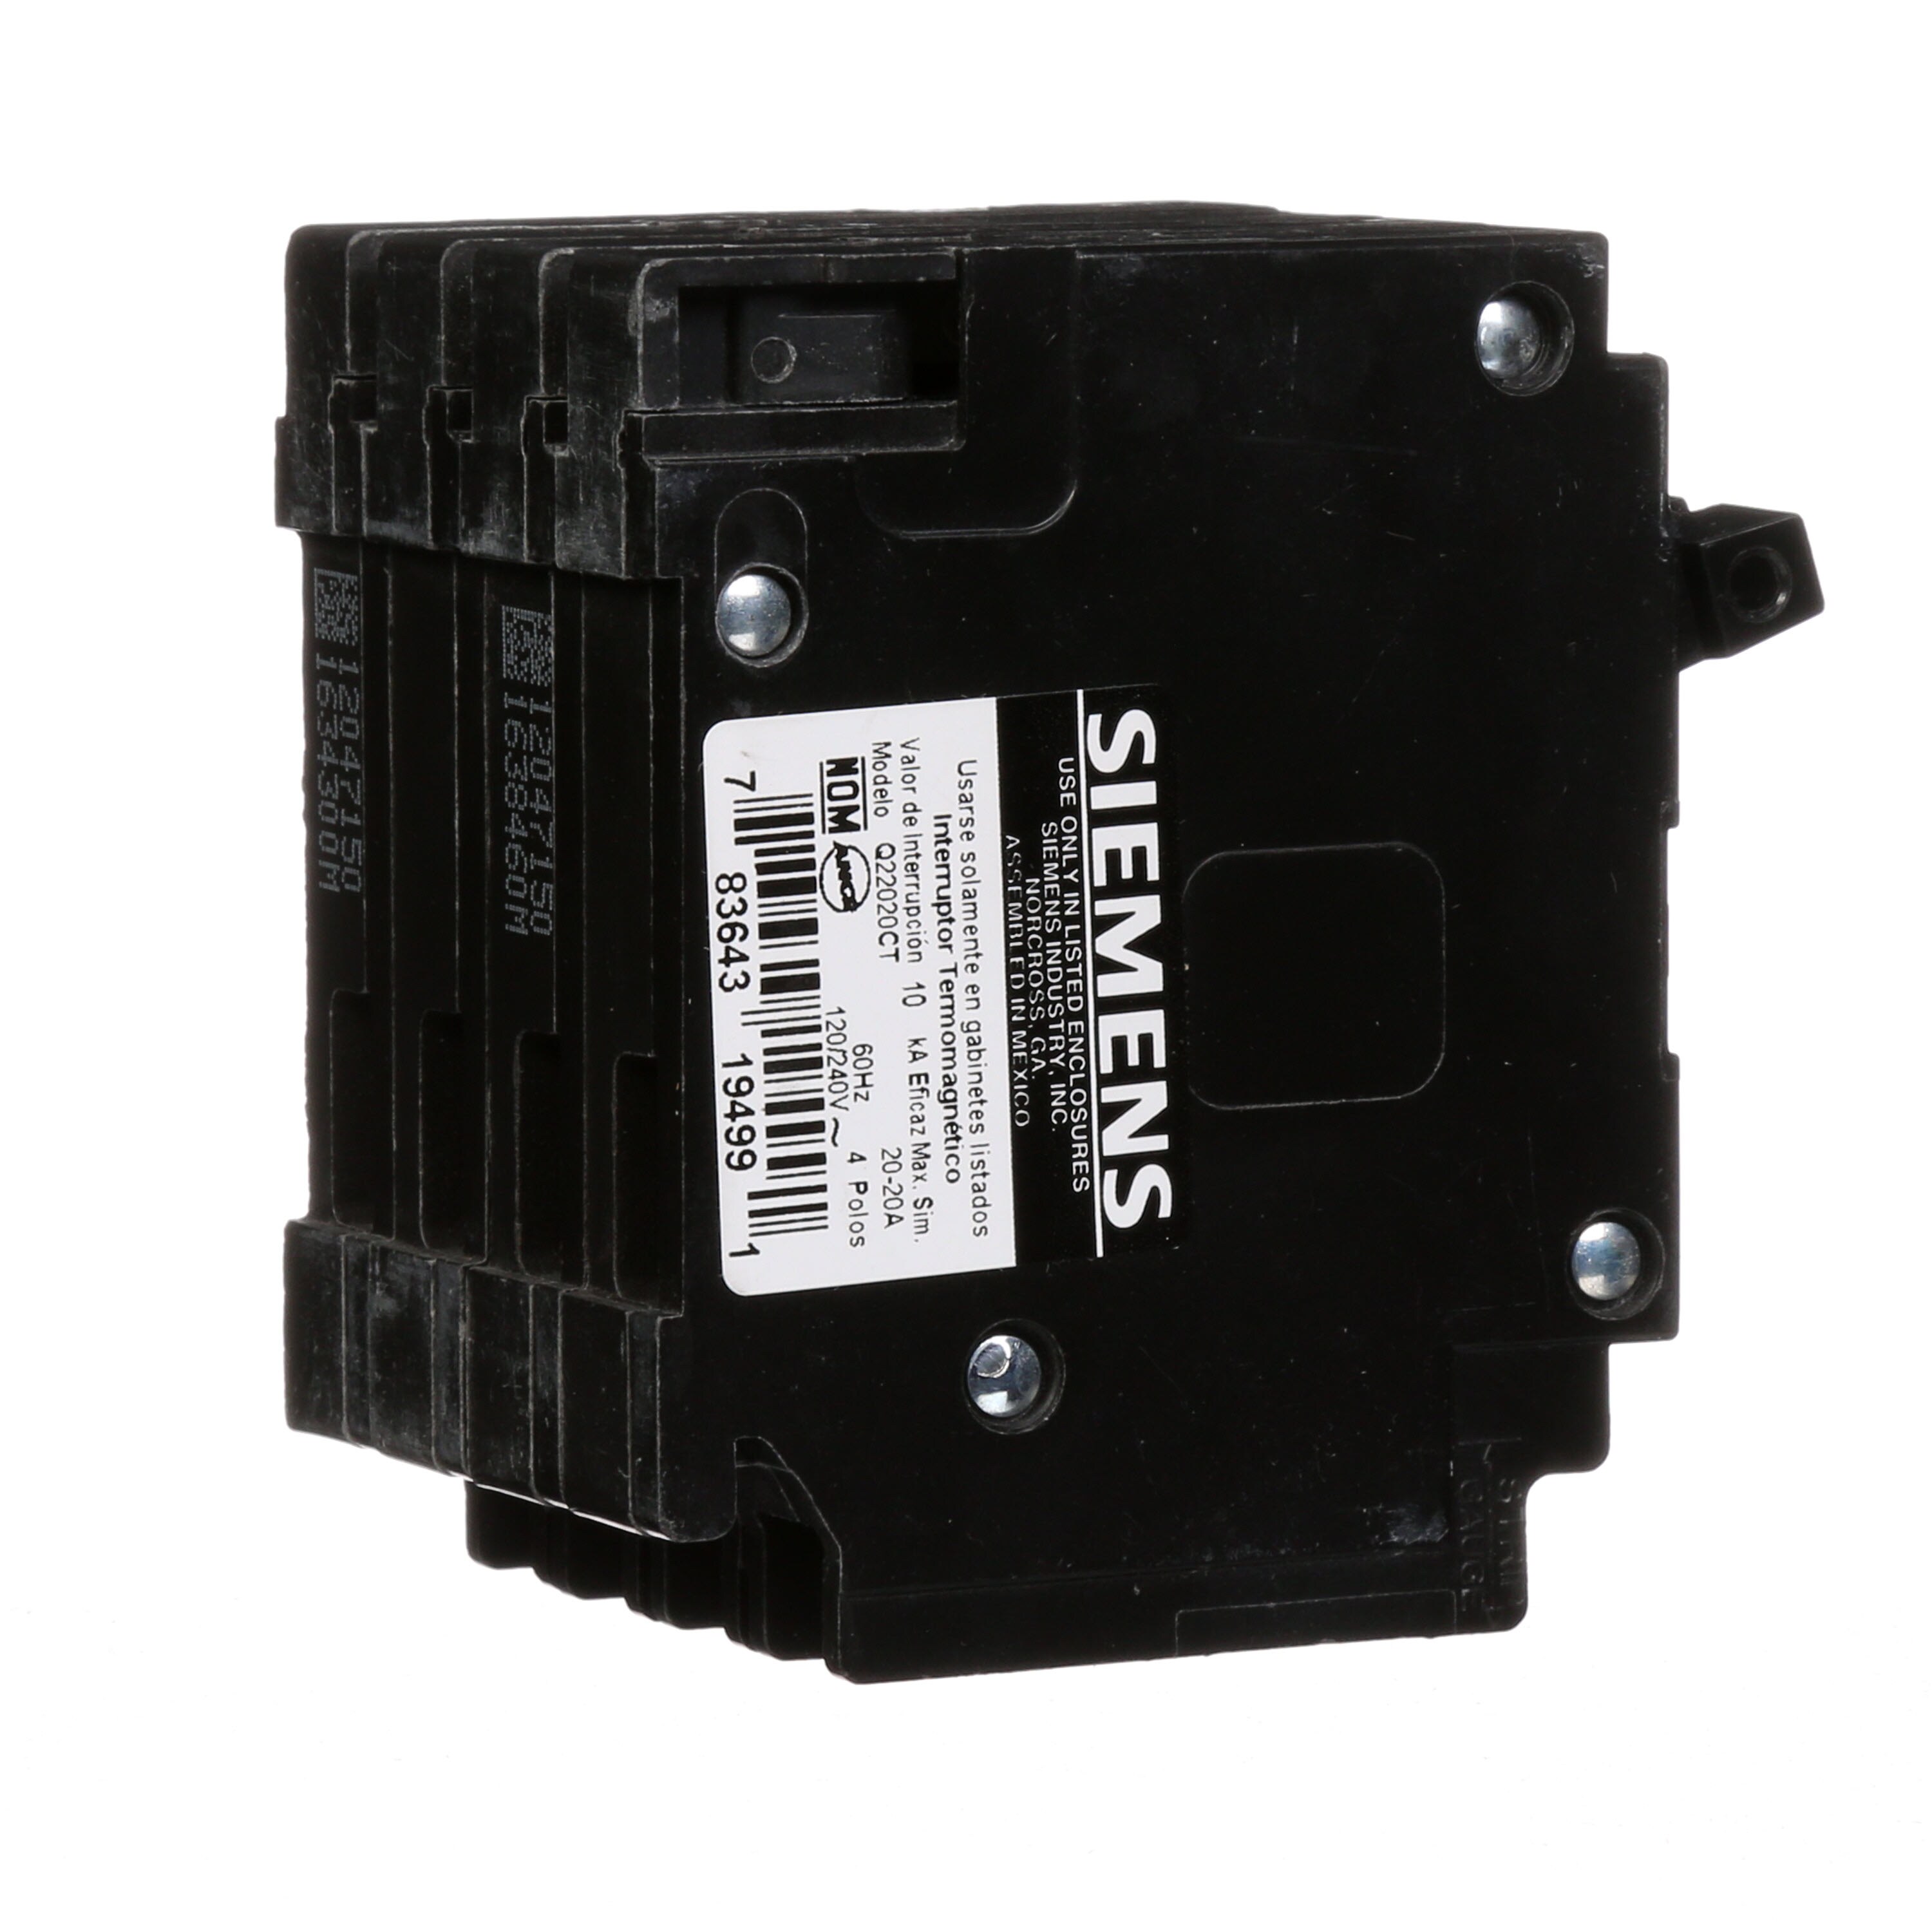 Siemens Q220 Circuit Breaker 2 Pole 20 Amp G14 for sale online 